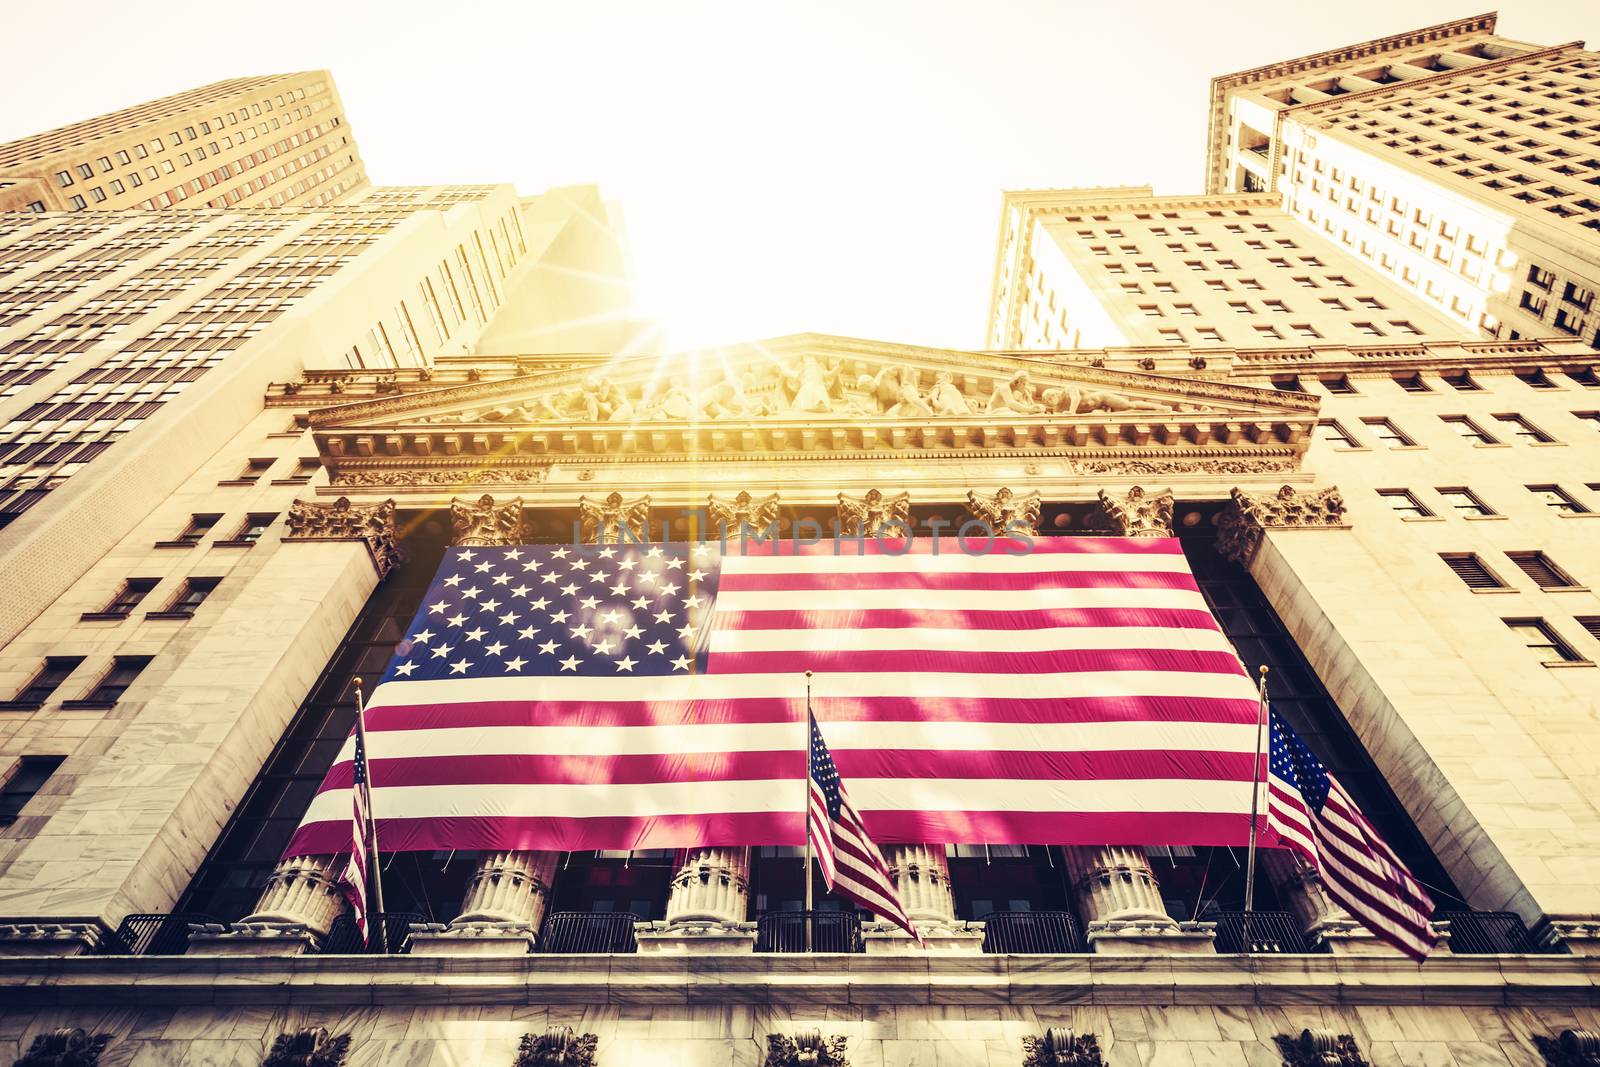 Wall Street New York Stock Exchange Entrance, USA.